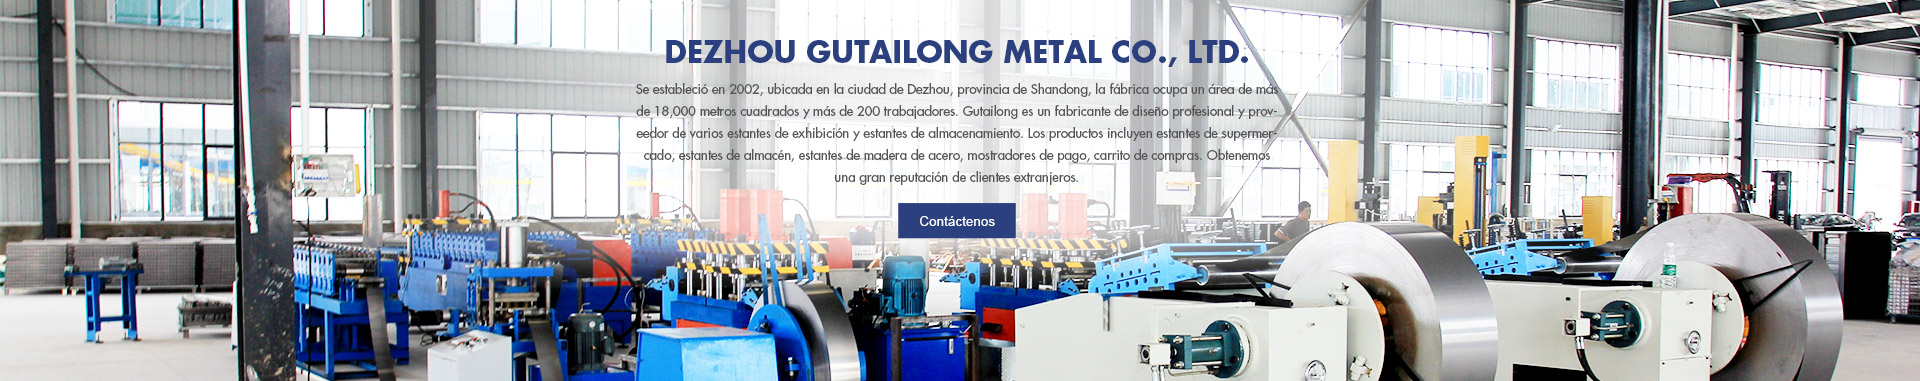 DEzhou GU Tailong metal co., Ltd.